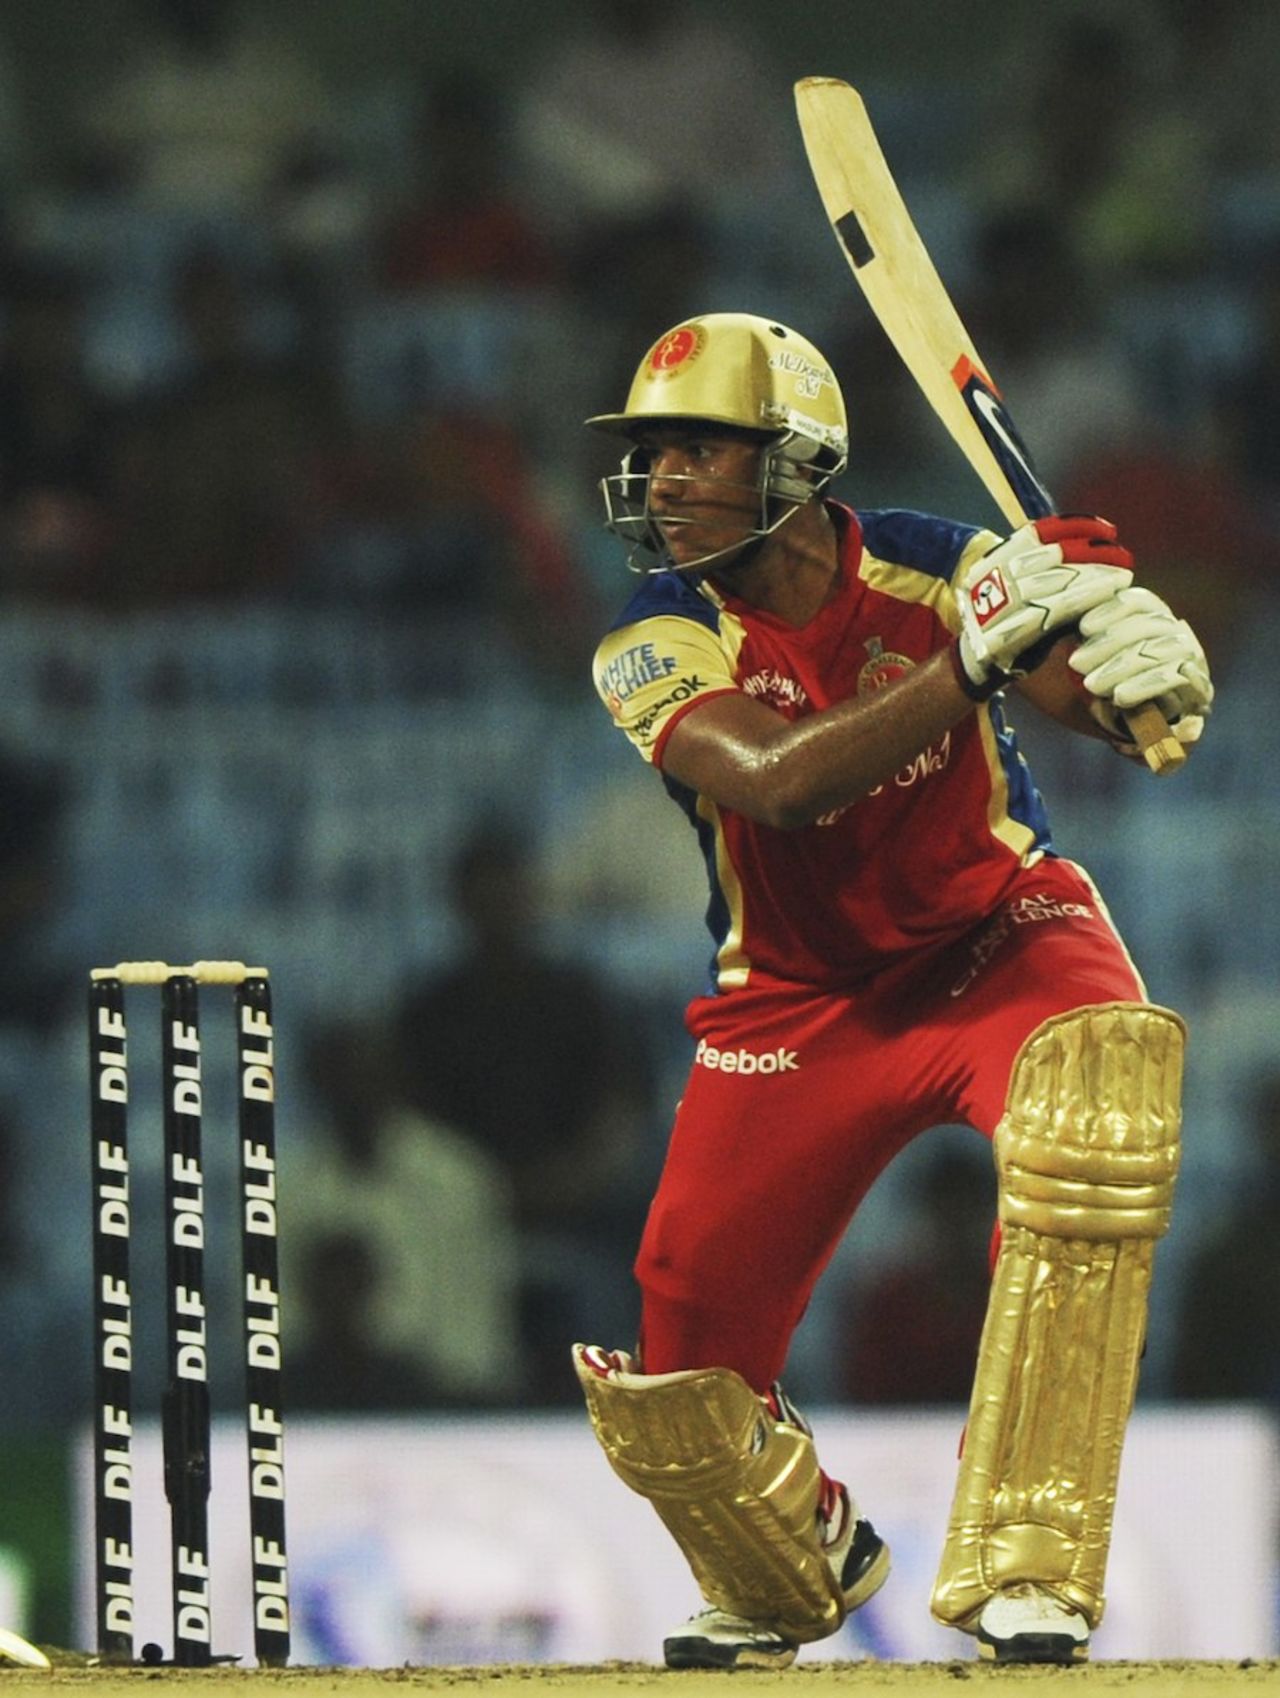 Mayank Agarwal scored 41 off 31 balls, Bangalore v Mumbai, 2nd qualifier, IPL 2011, Chennai, May 27, 2011